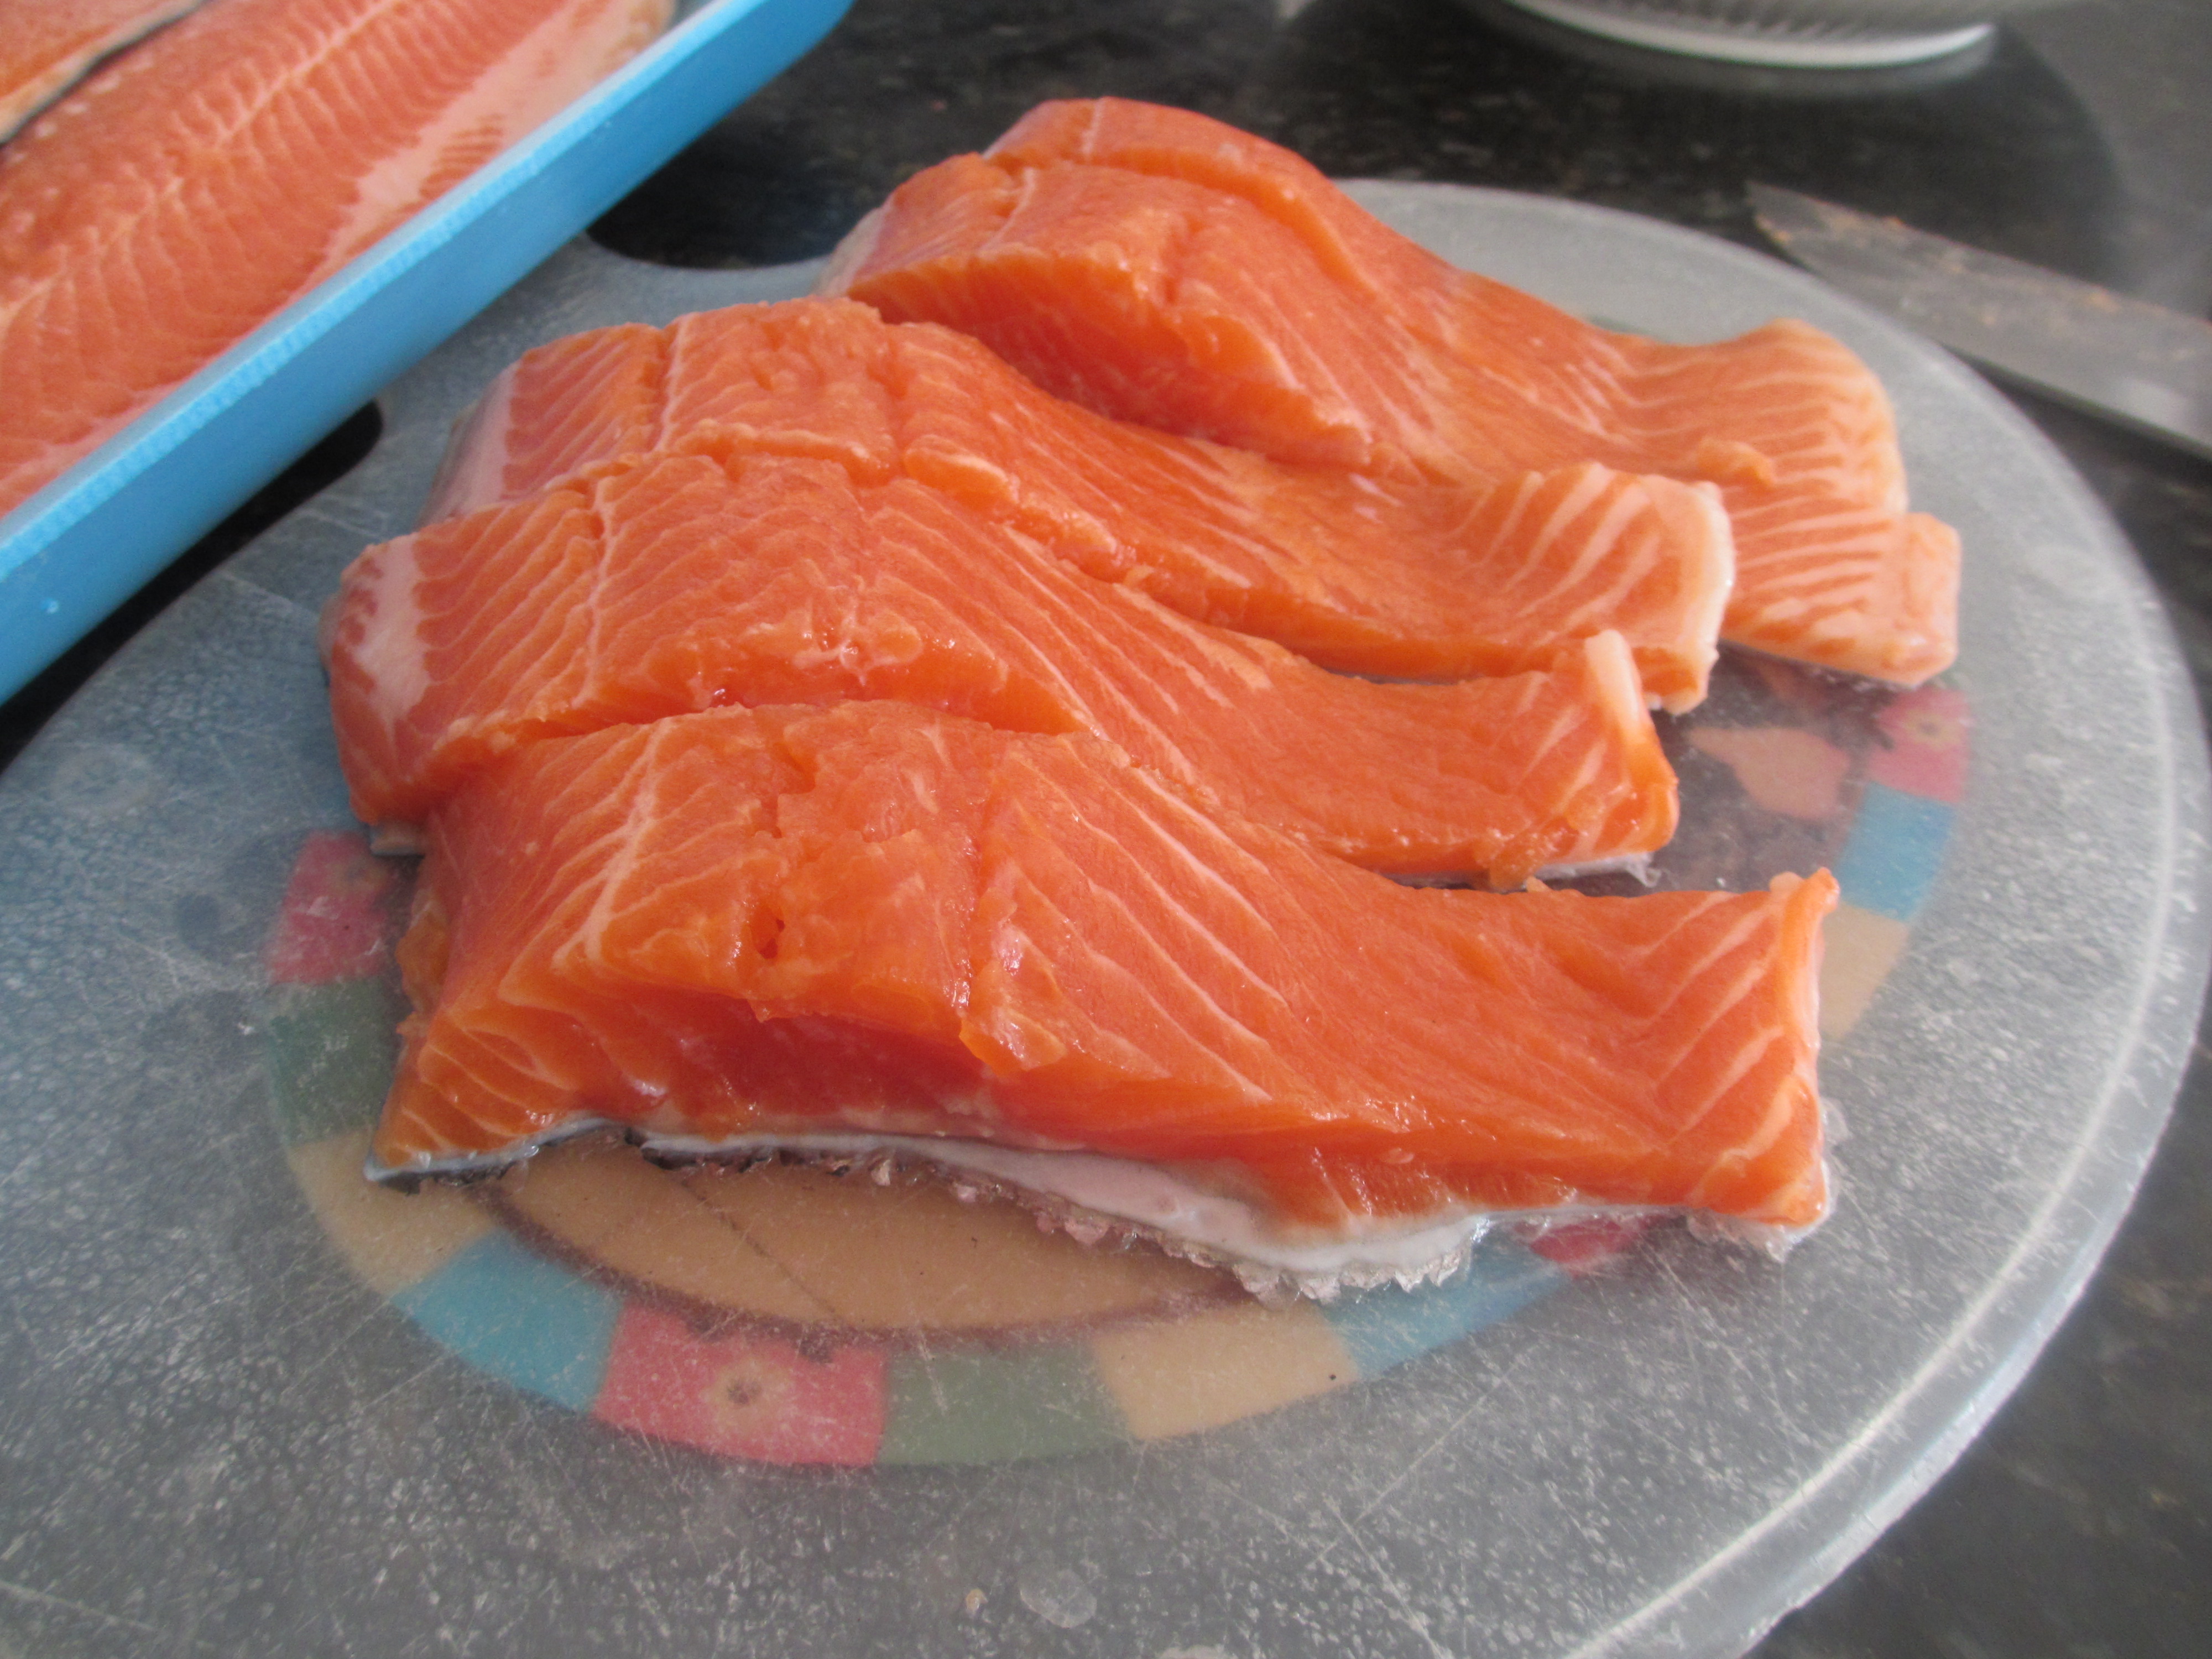 Salmon filet, sliced